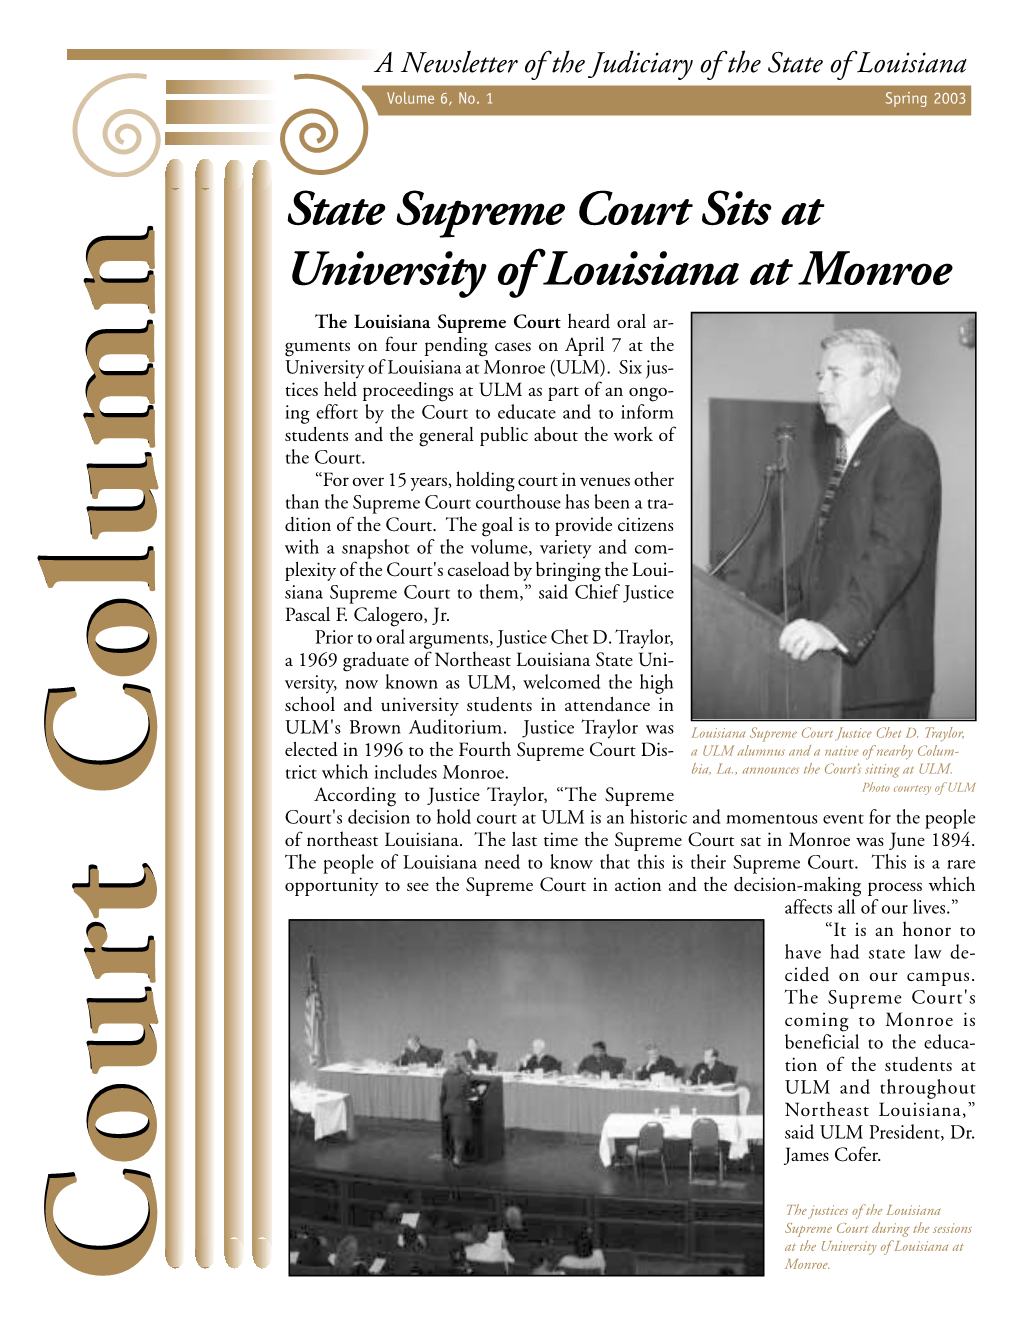 State Supreme Court Sits at University of Louisiana at Monroe